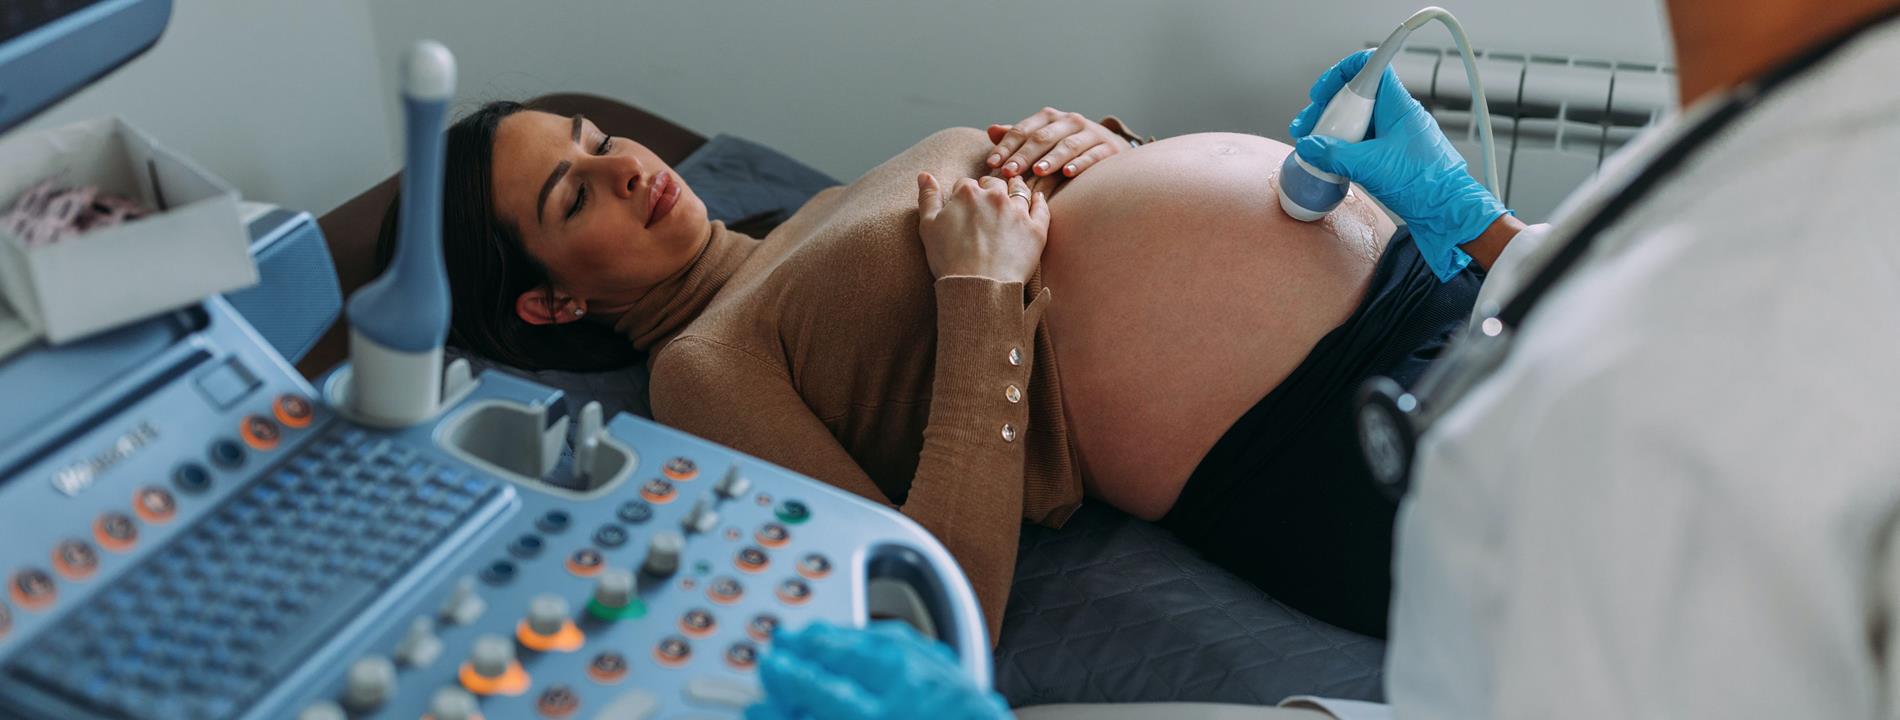 Gateshead Fertility: A patient attends Gateshead Fertility Clinic for an ultrasound scan.